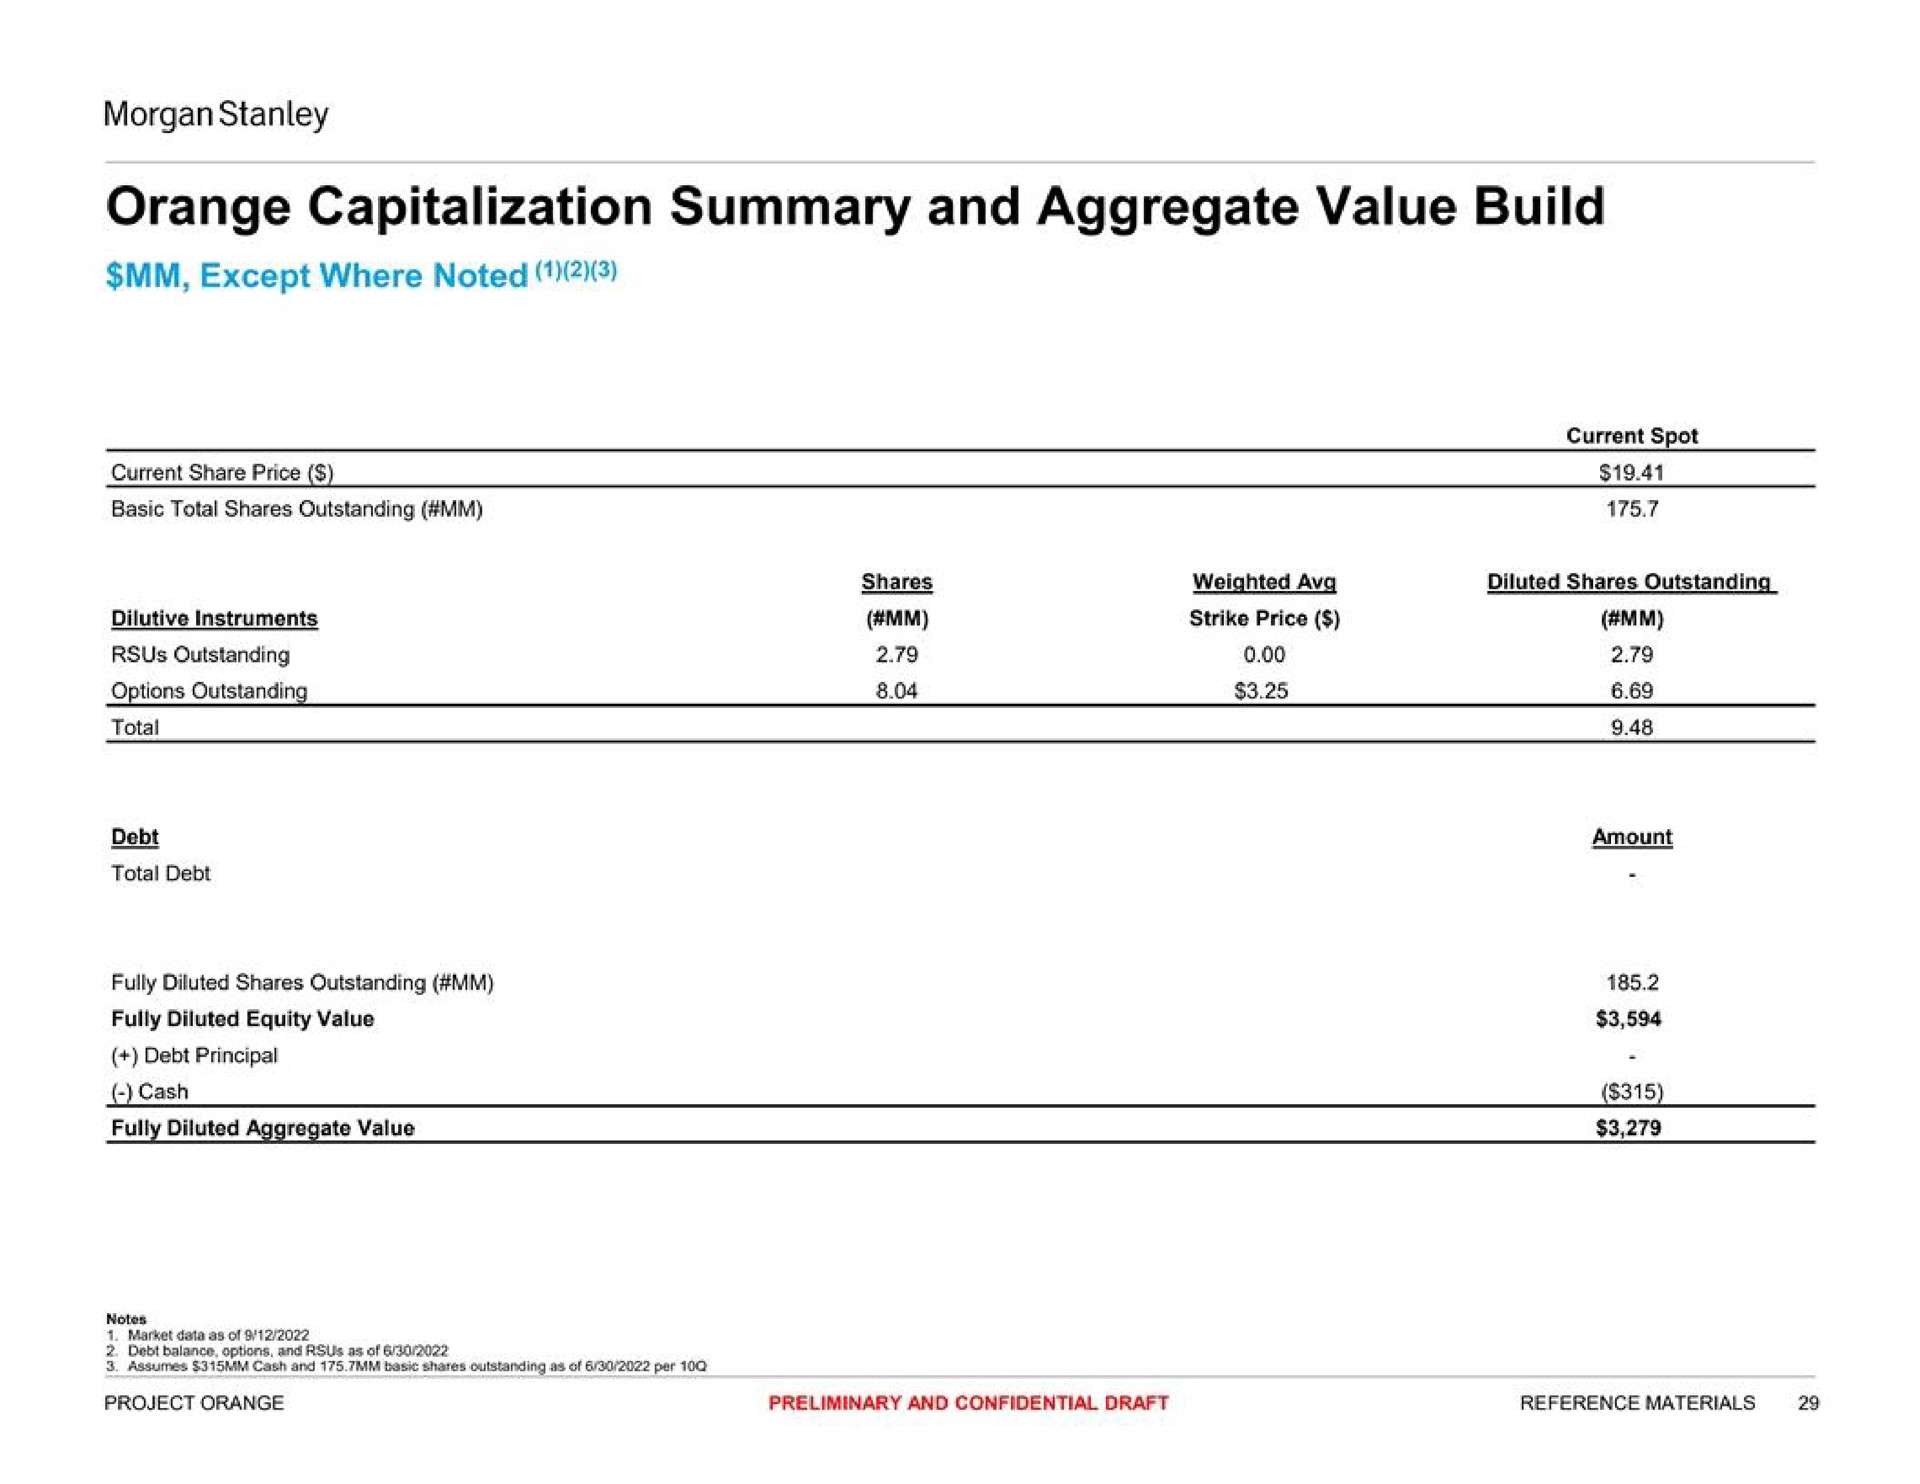 orange capitalization summary and aggregate value build | Morgan Stanley